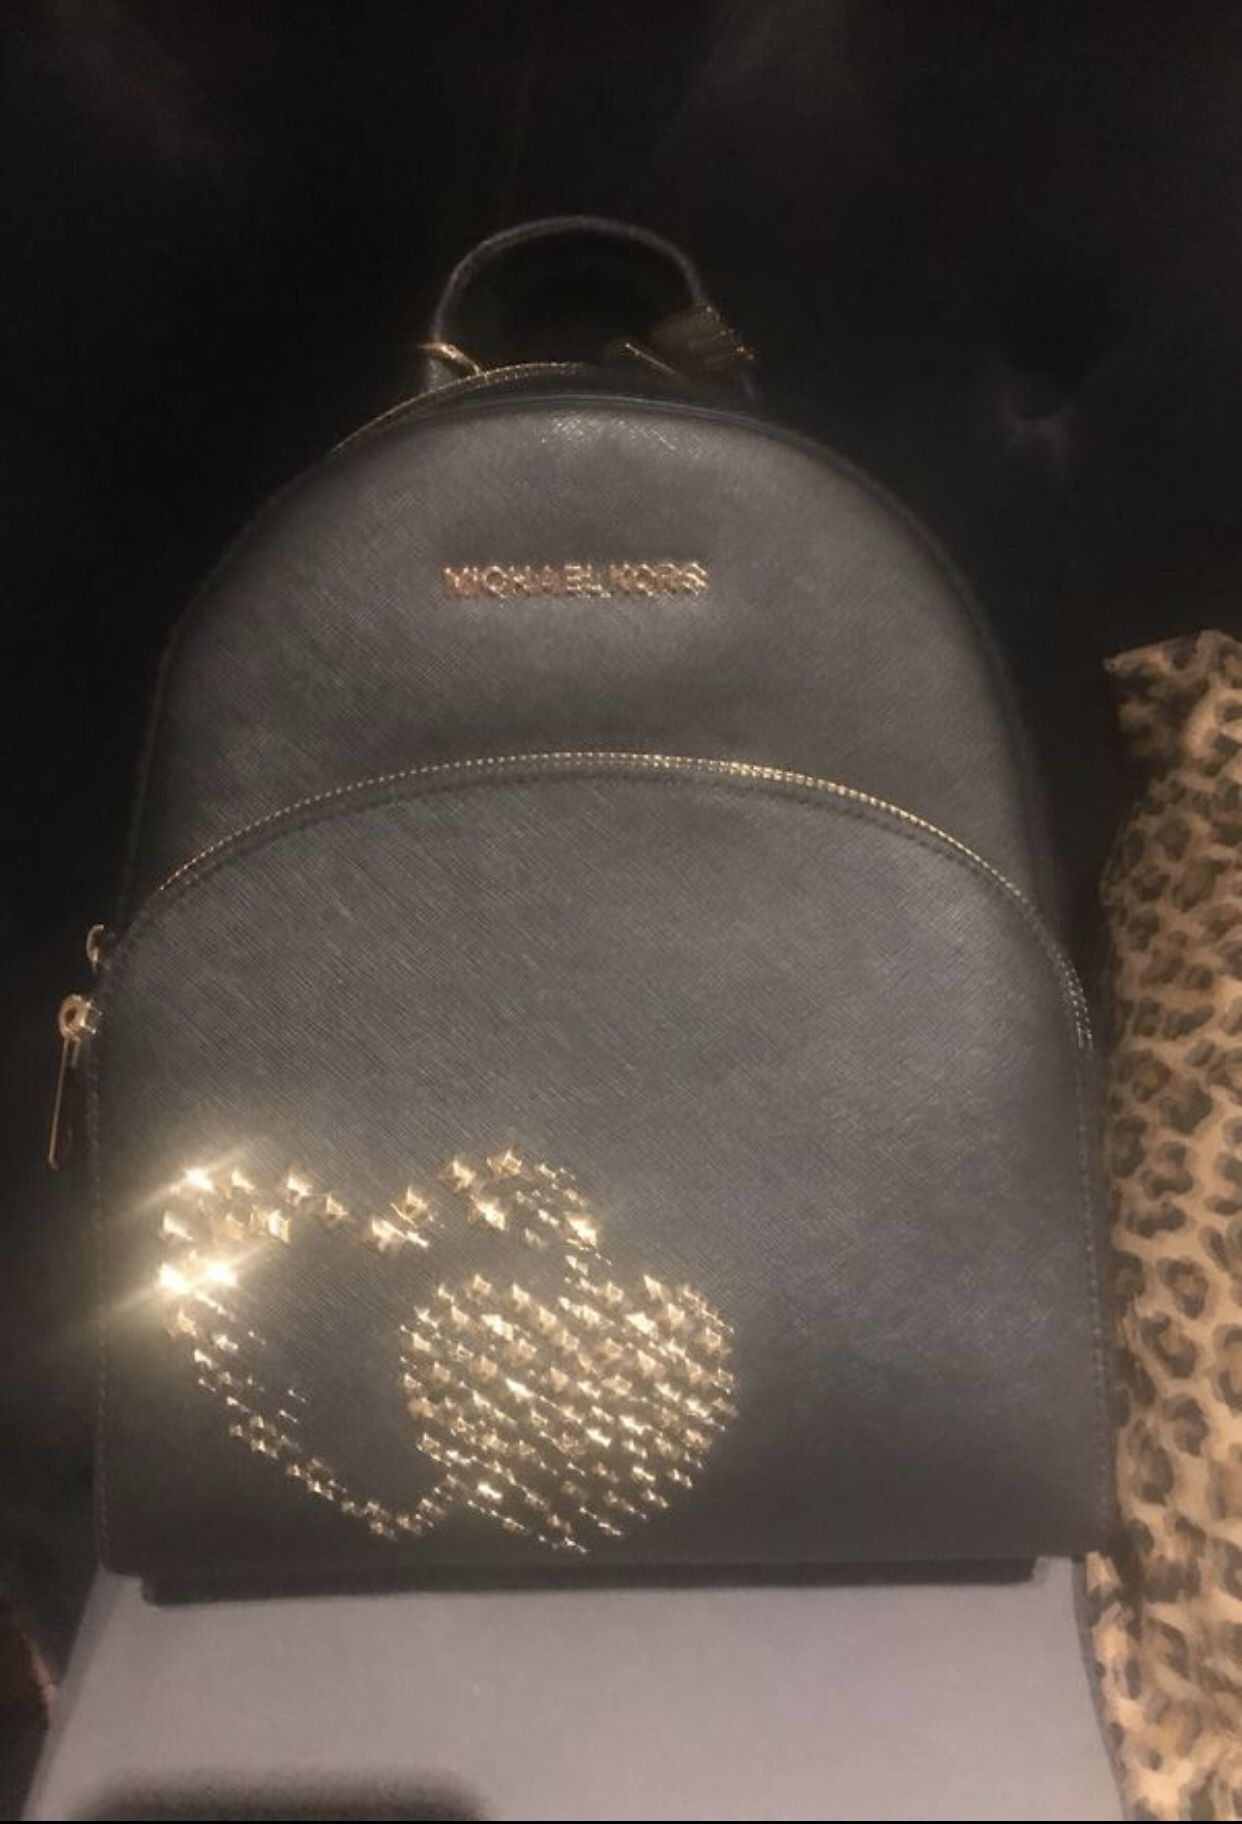 Michael Kors medium size backpack purse New Tag